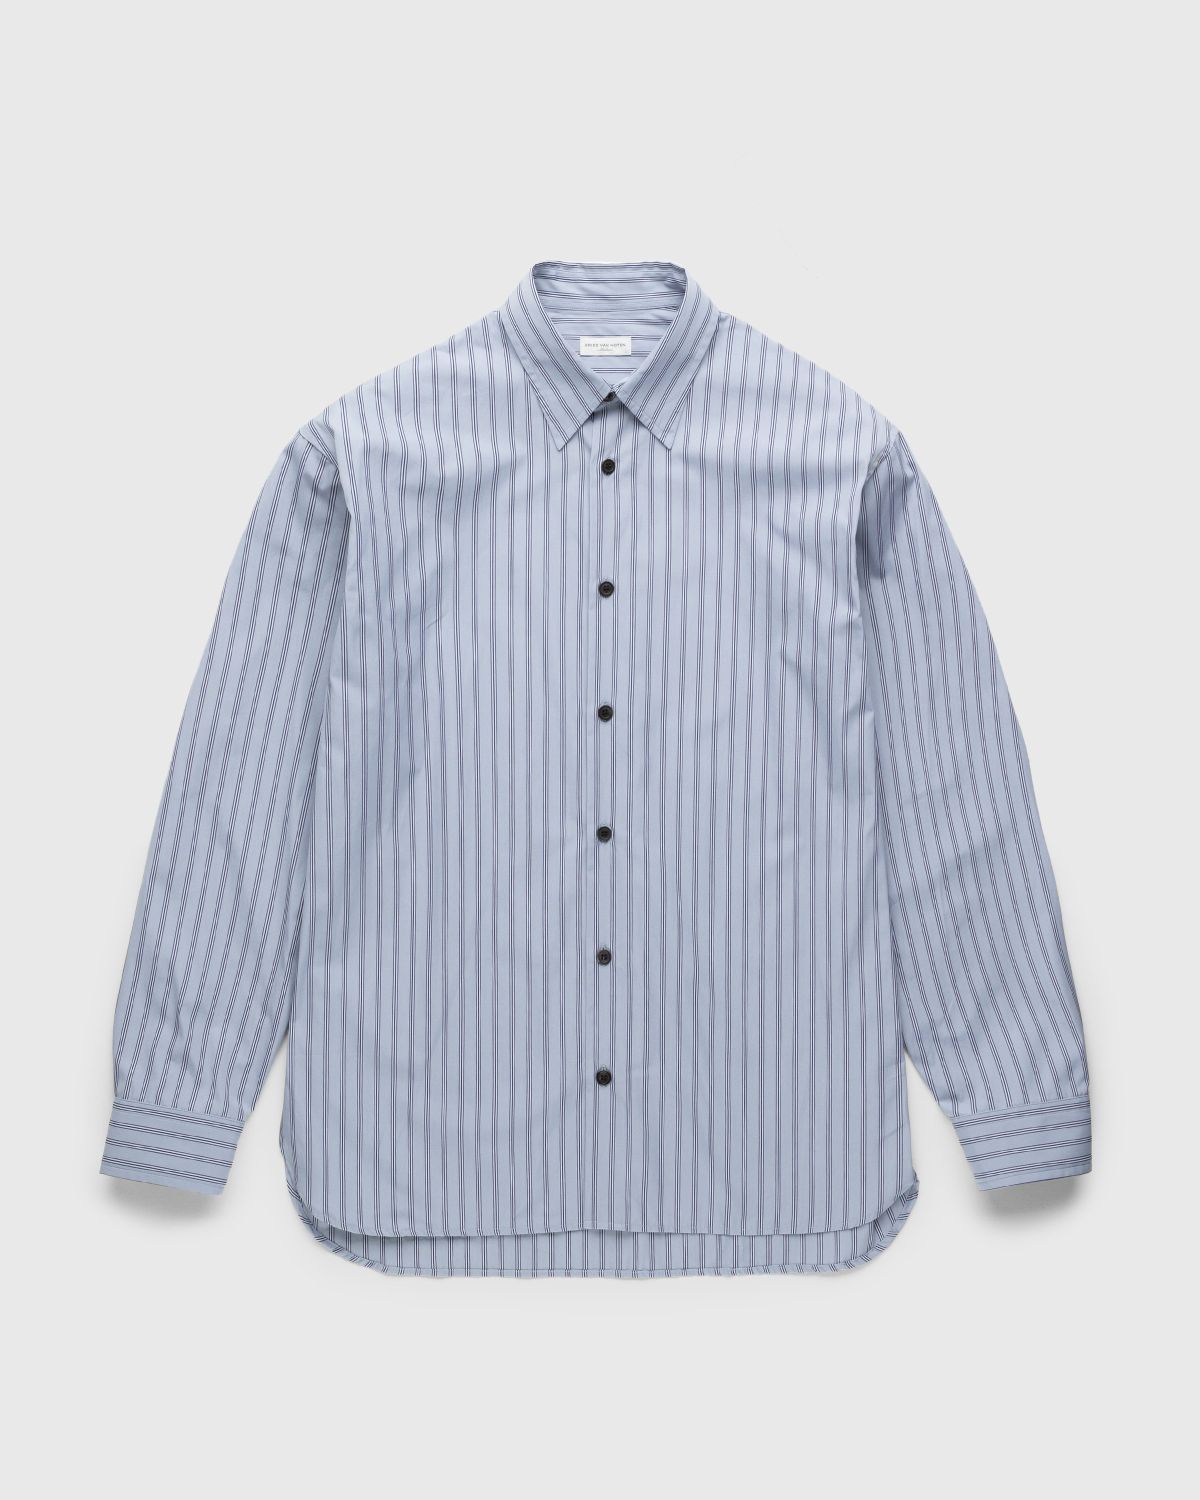 Dries van Noten – Croom Shirt Blue | Highsnobiety Shop